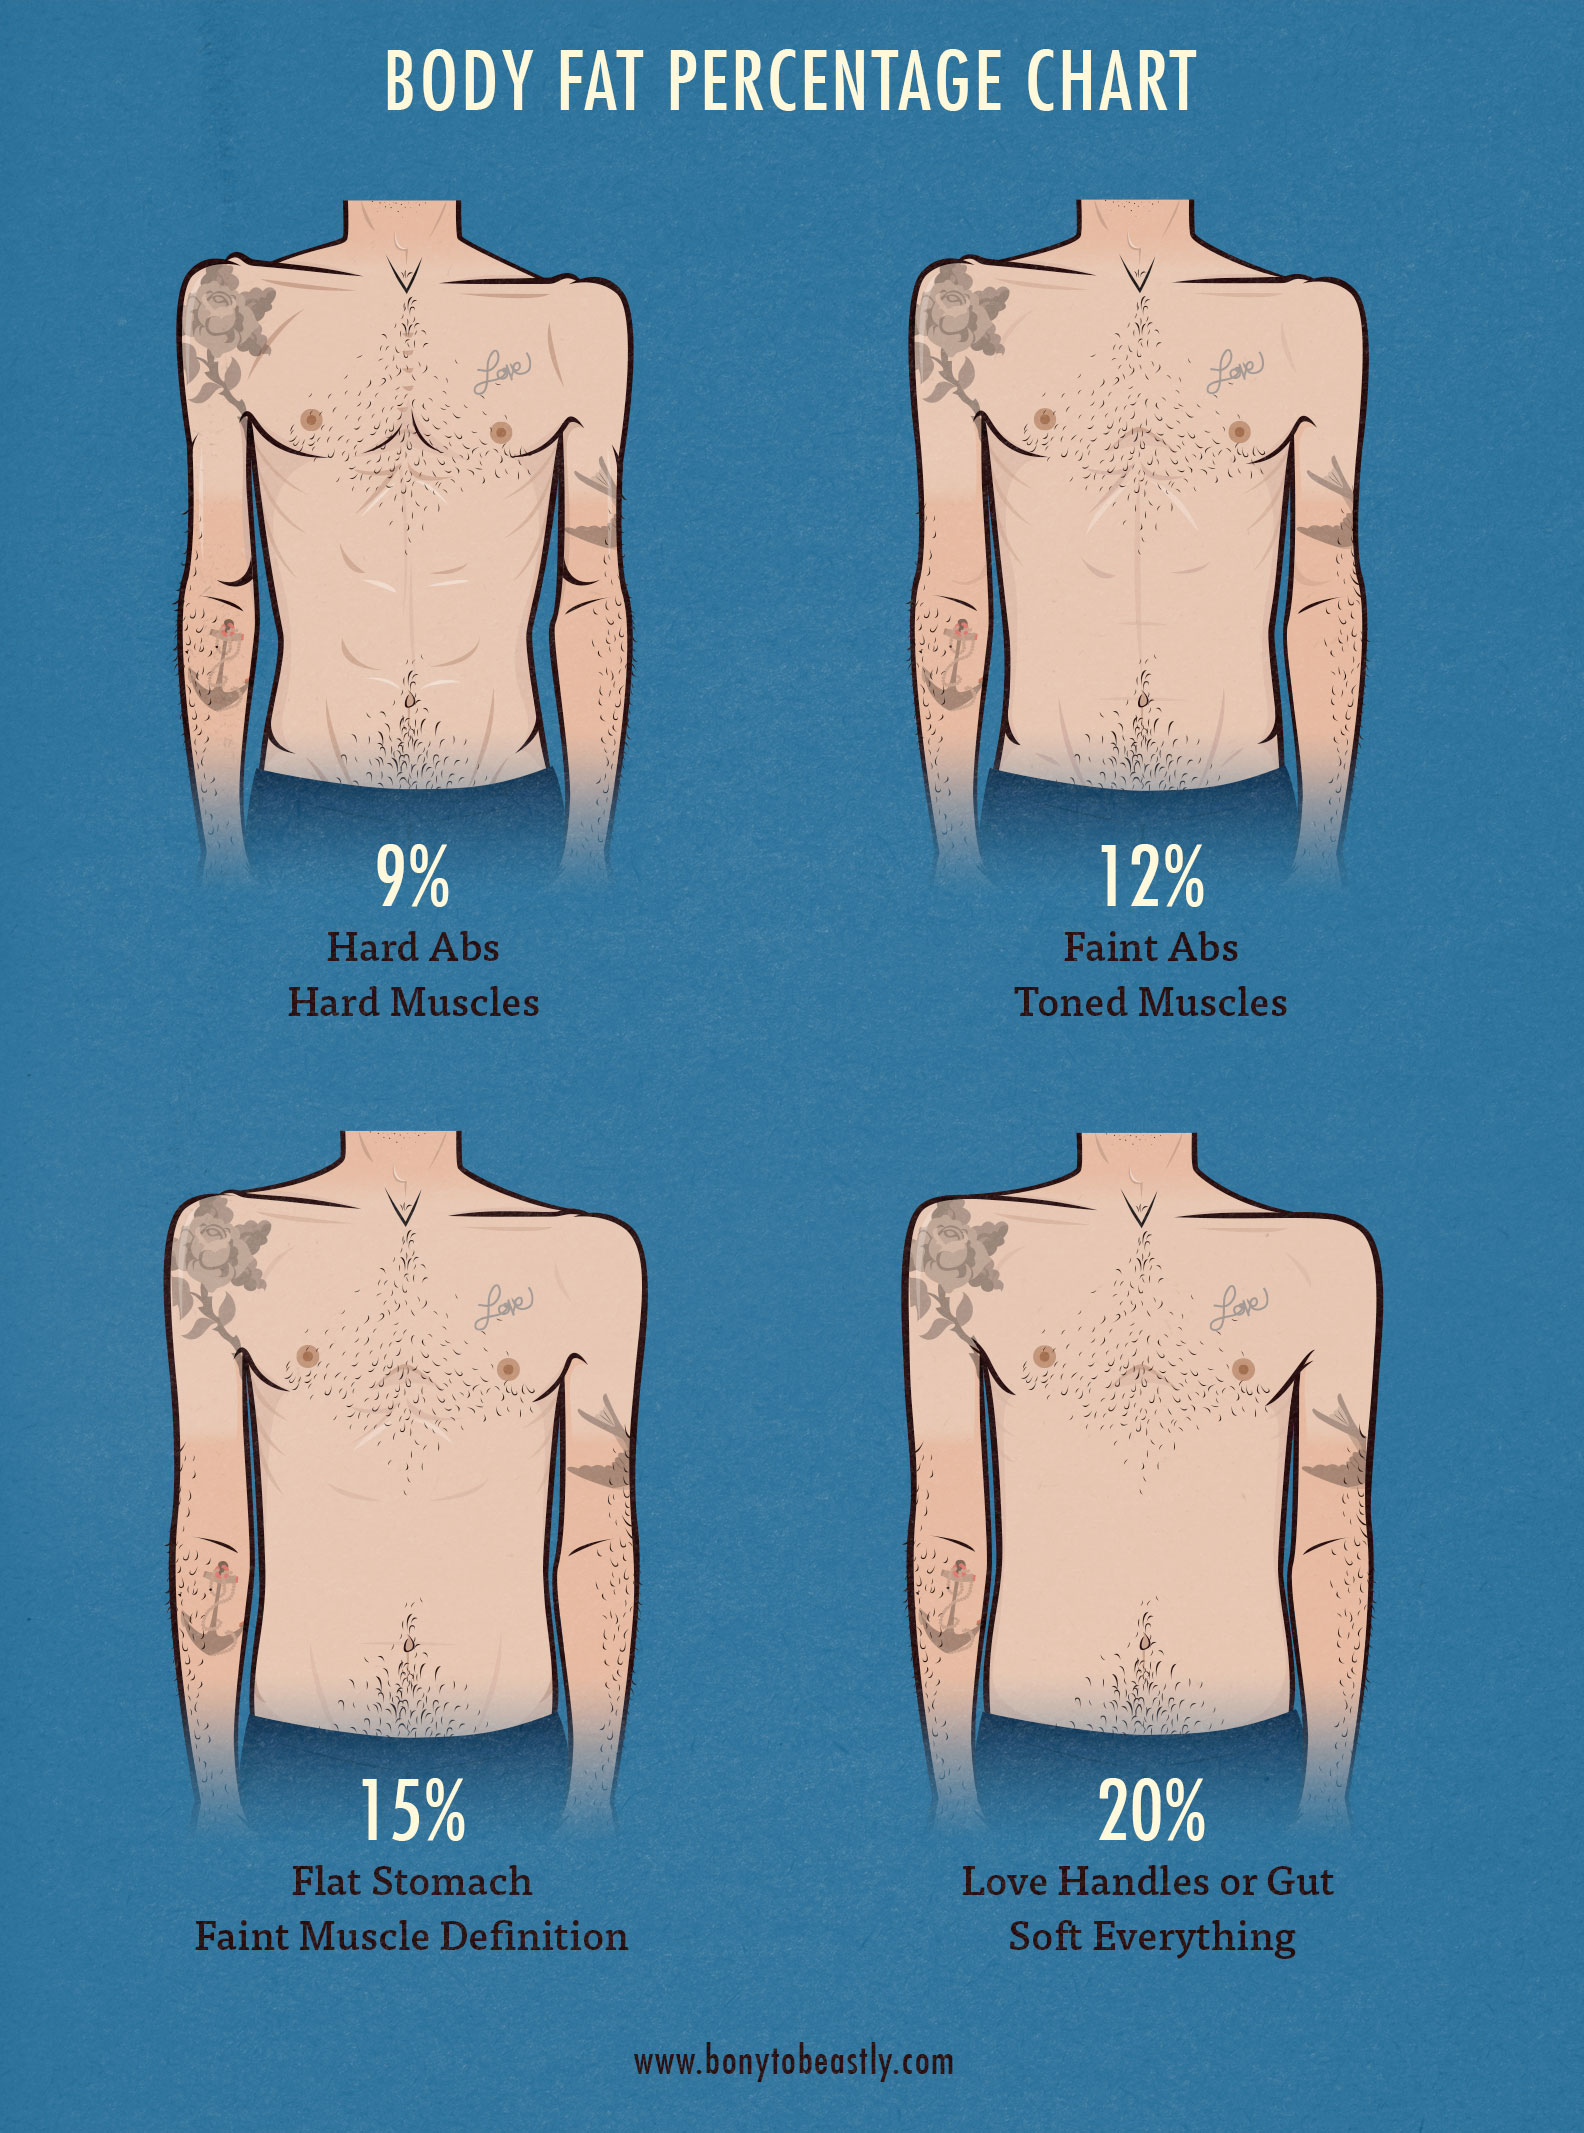 Body Fat Percentage Image Chart